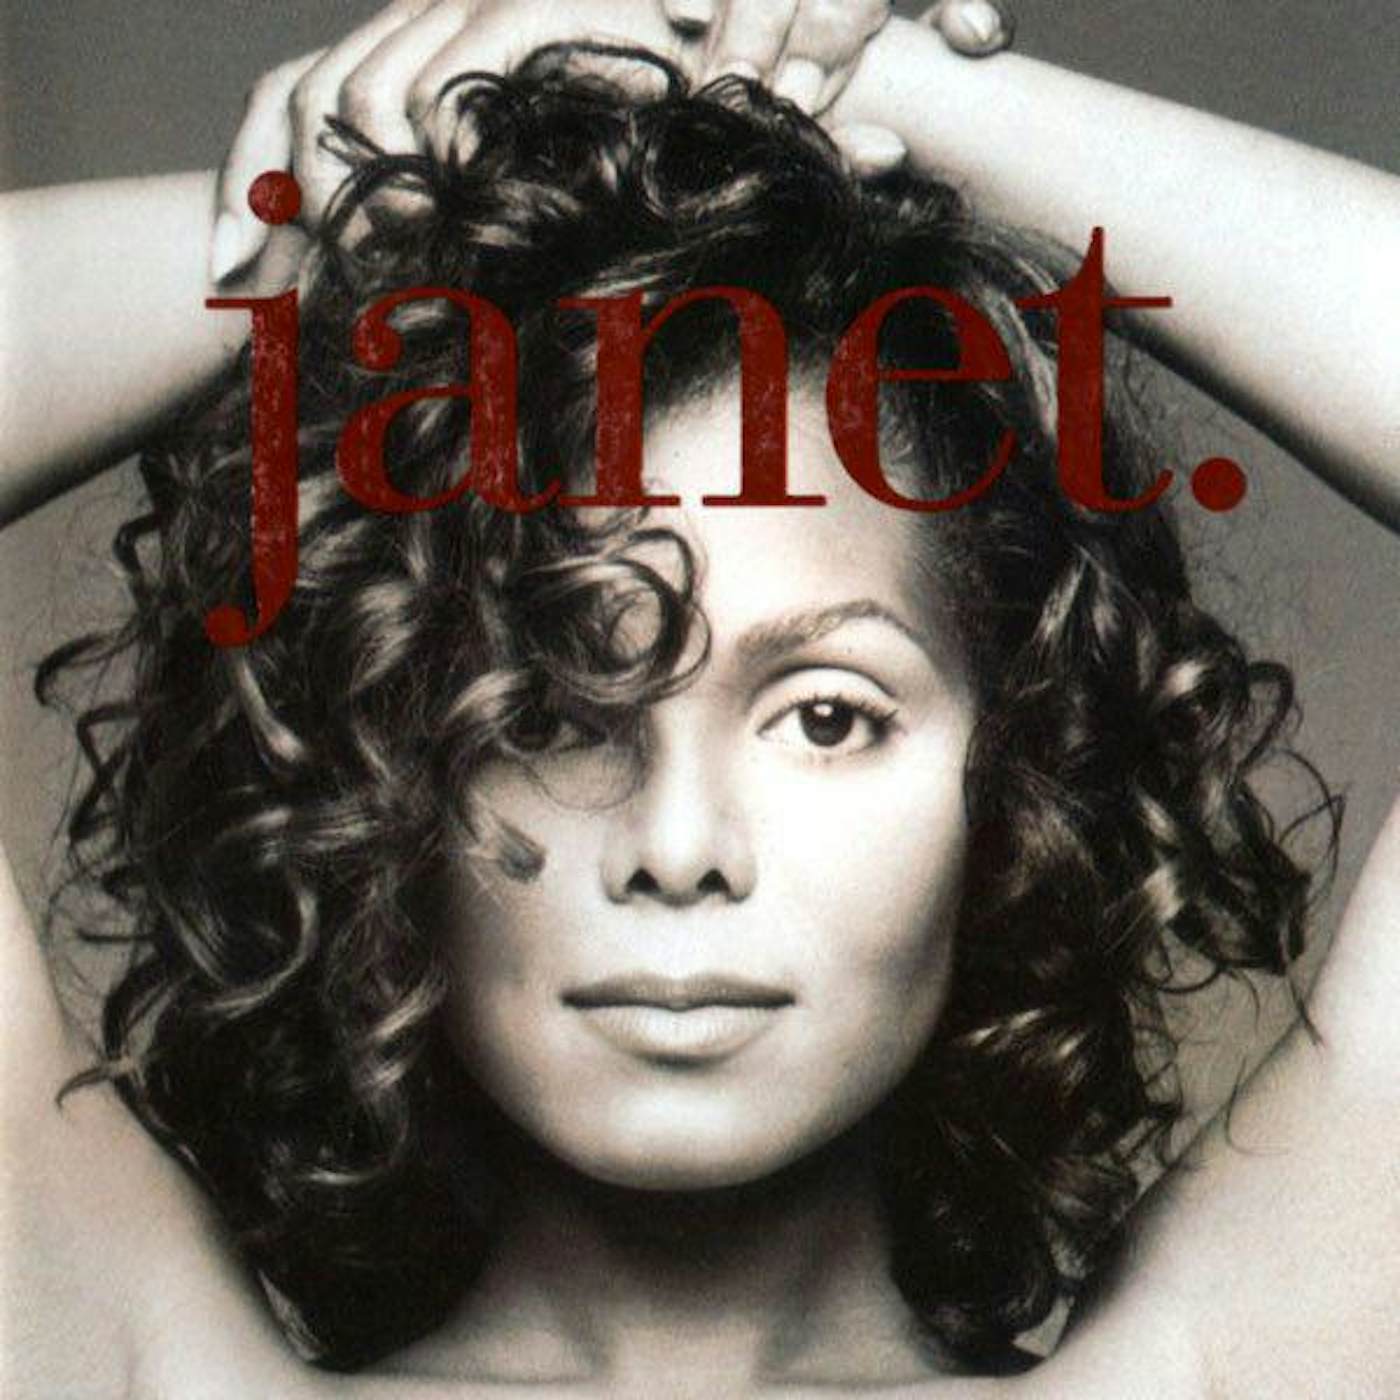 Janet Jackson Janet. Vinyl Record